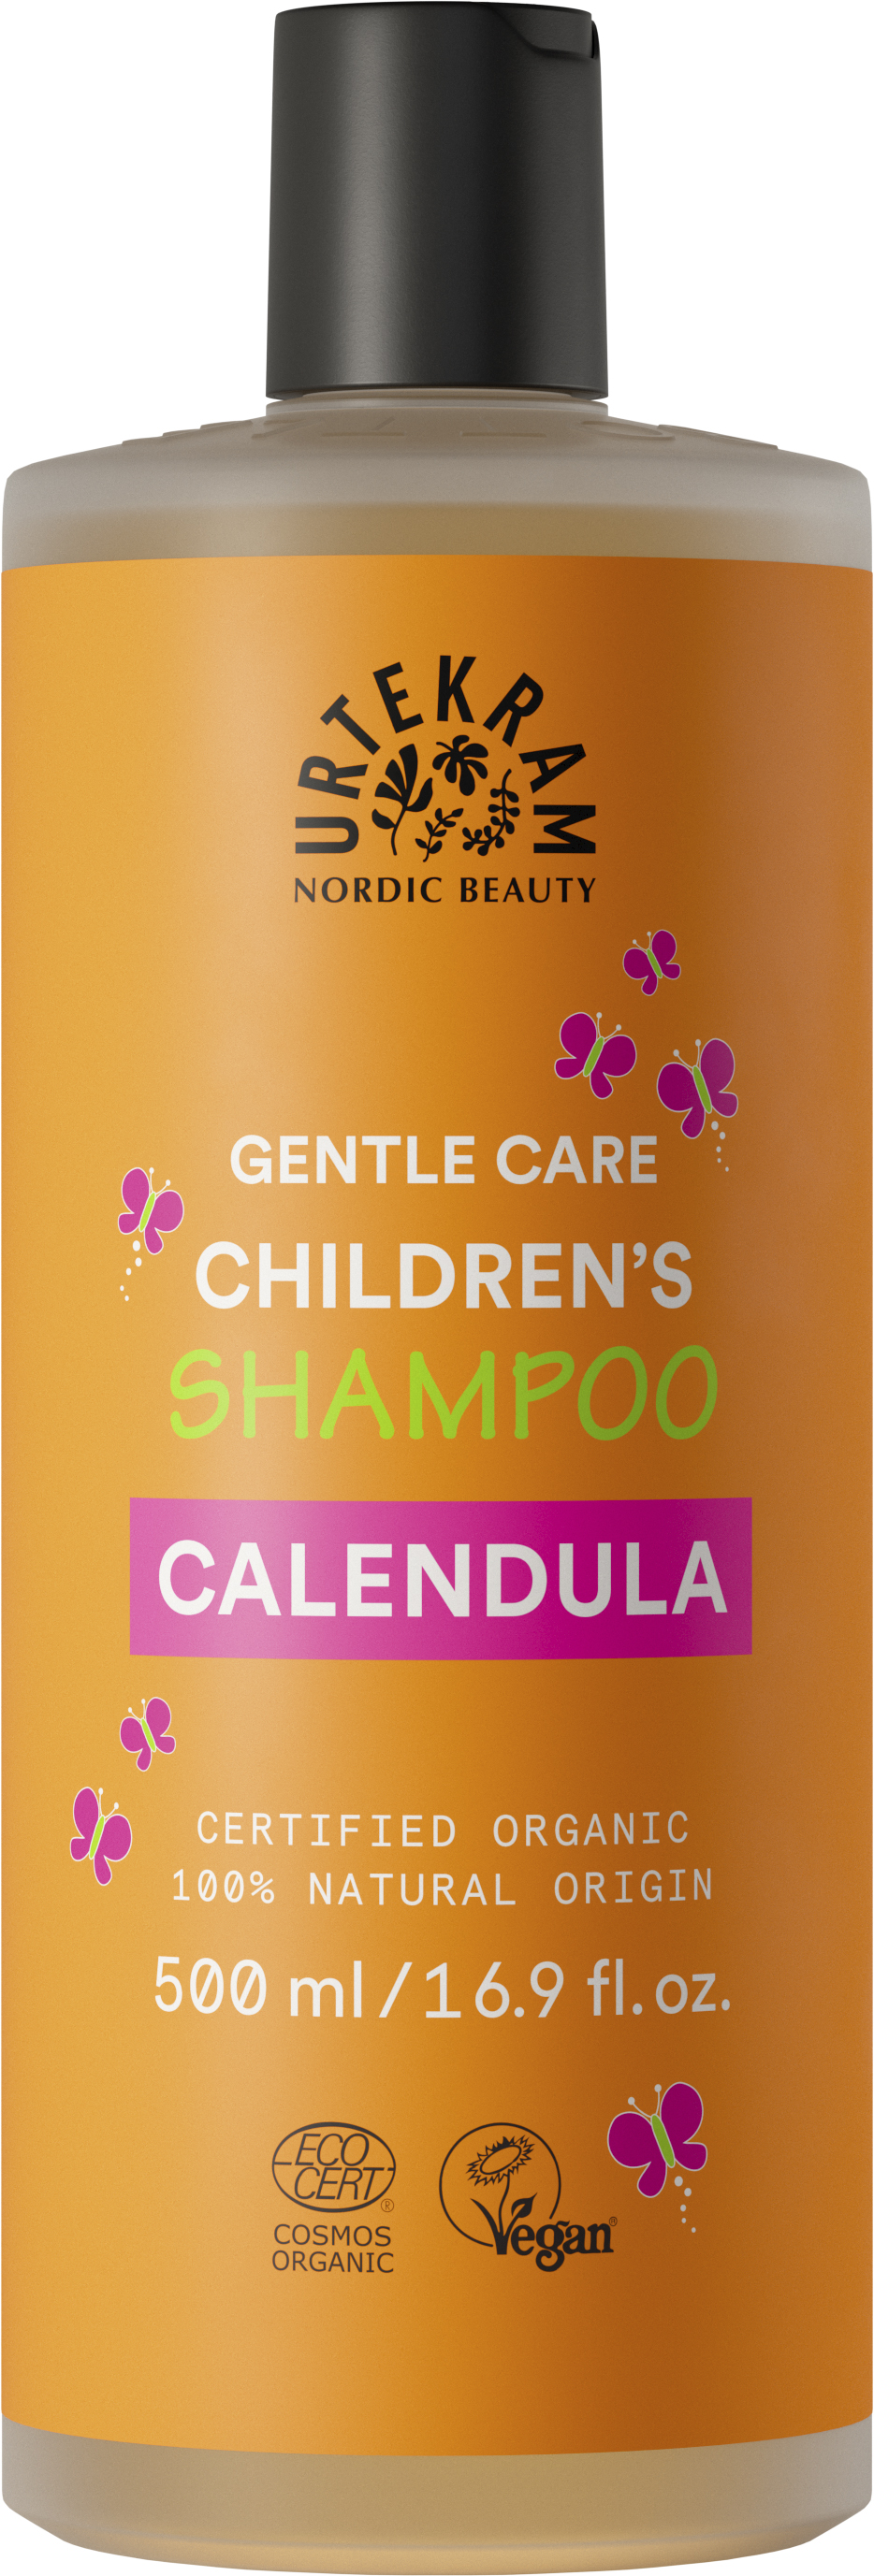 Calendula Children’s Shampoo 500 ml - Urtekram